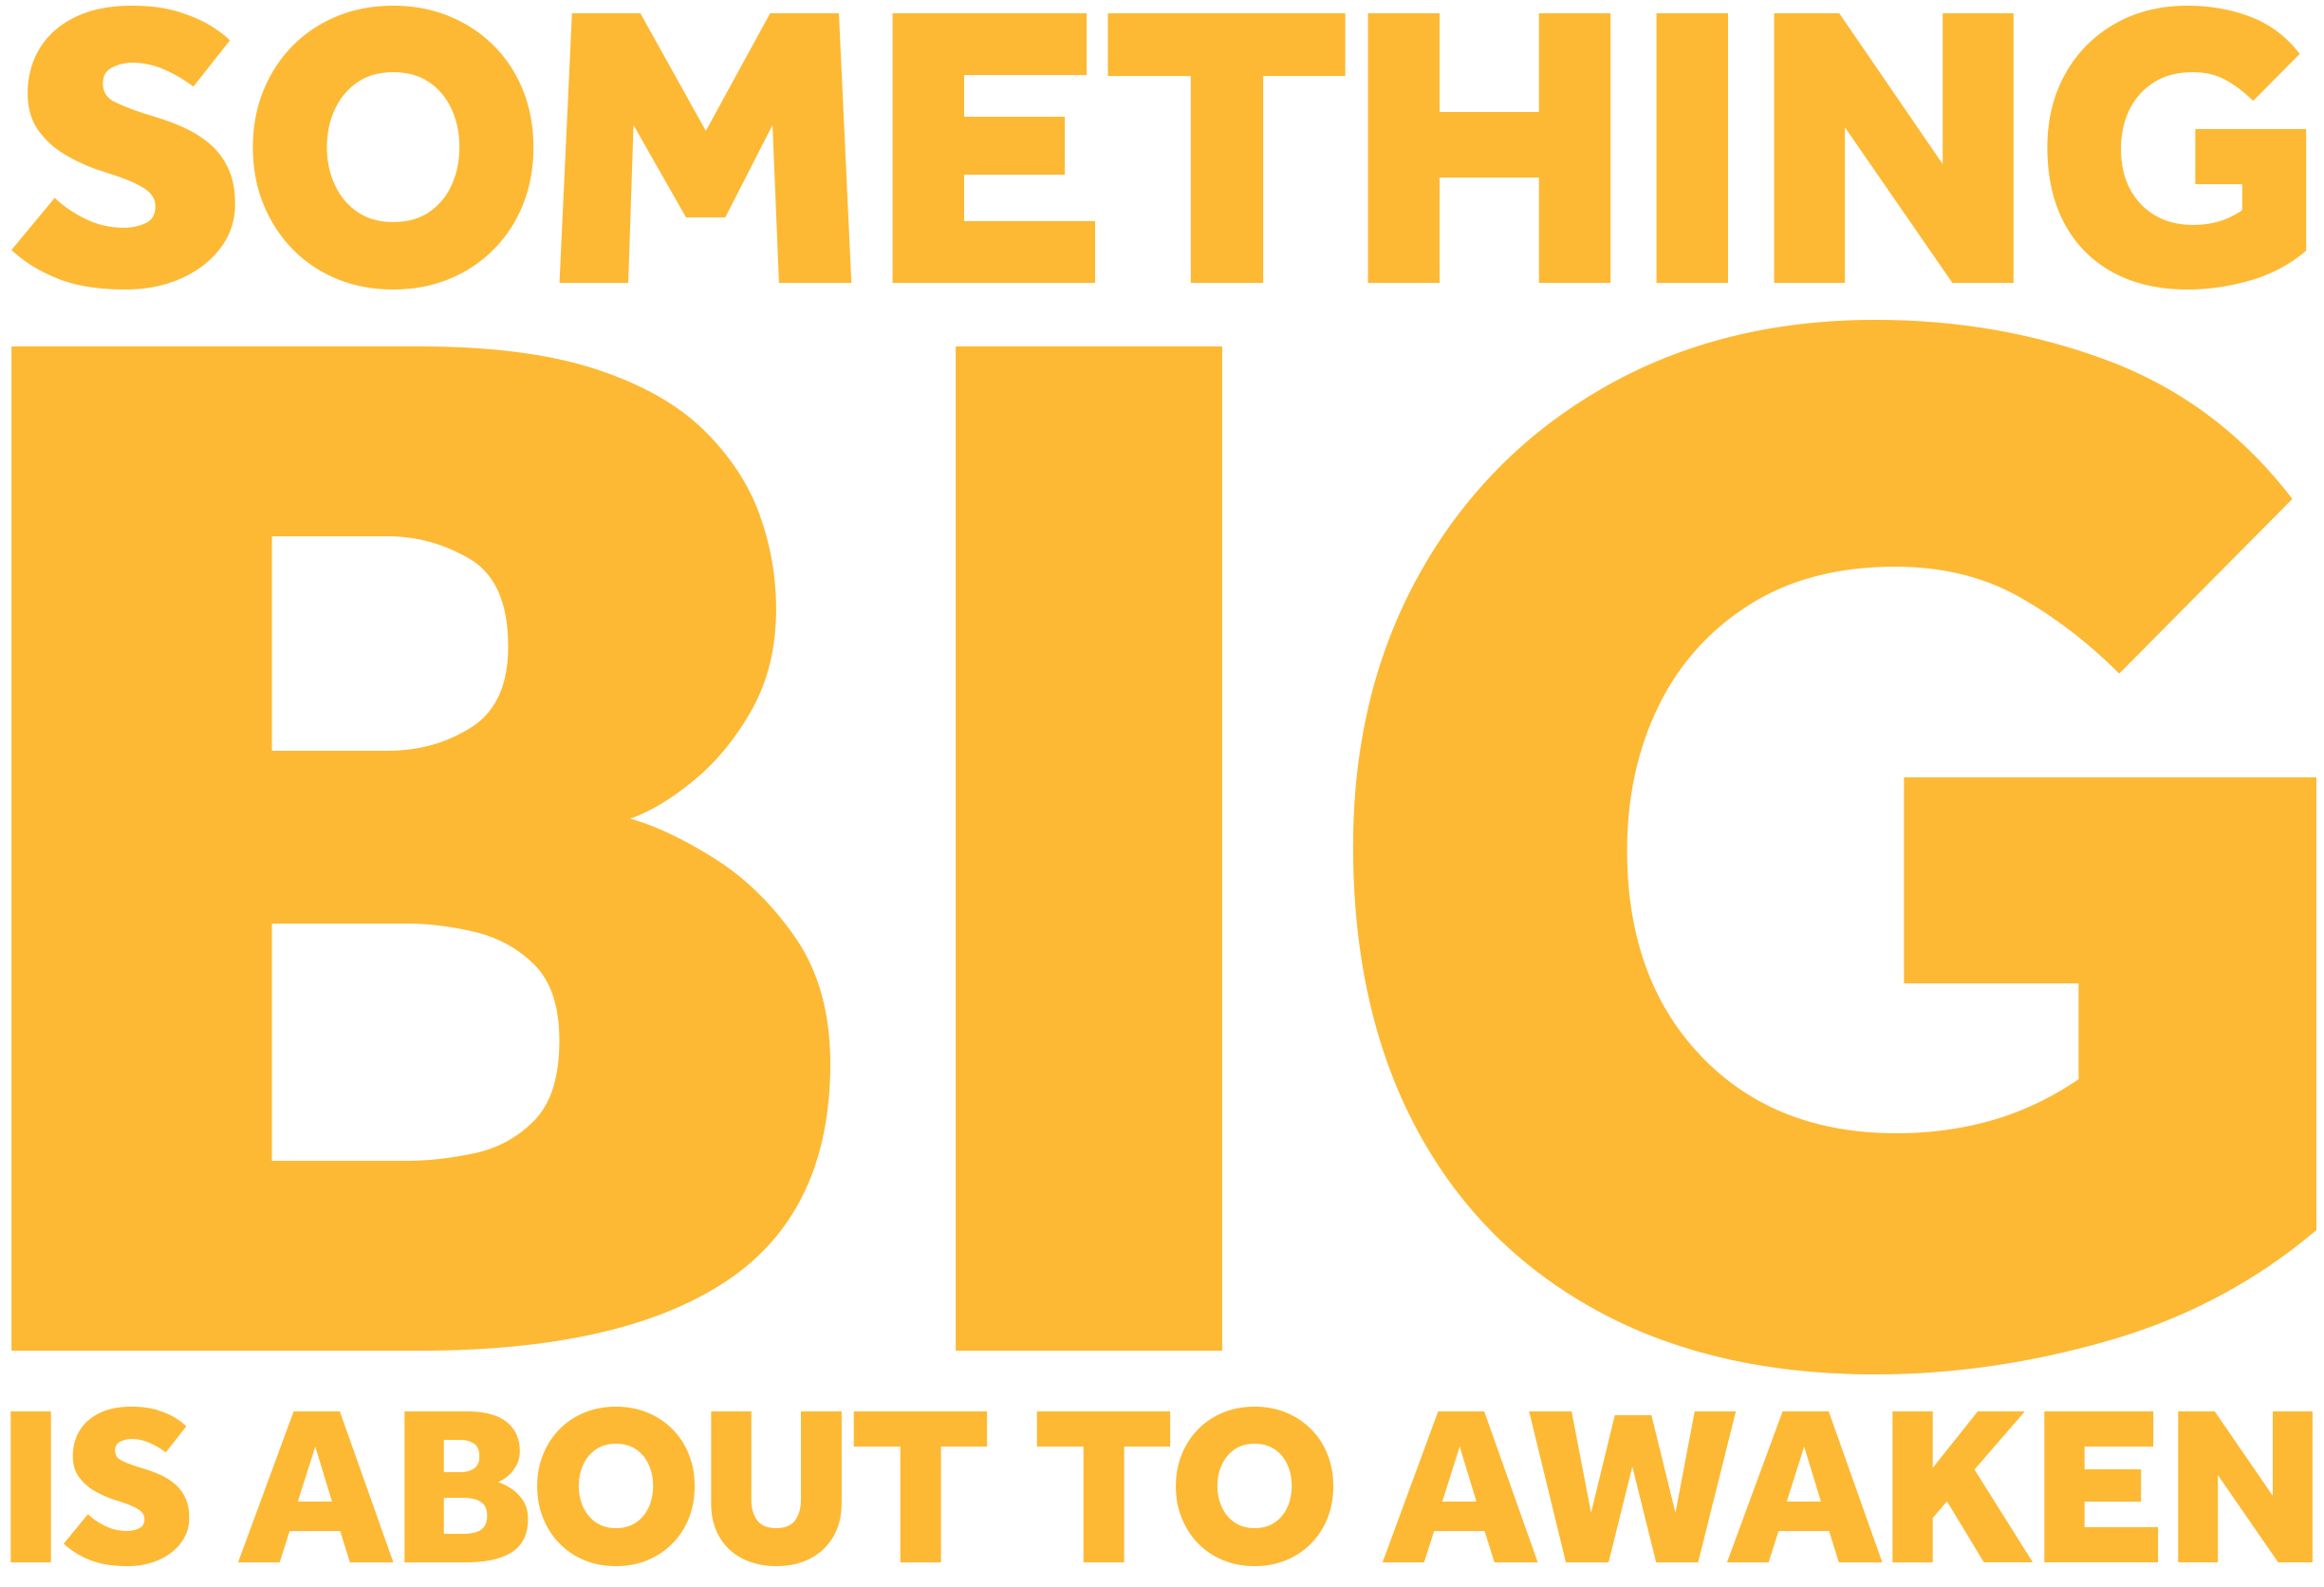 Something big is about to awaken text